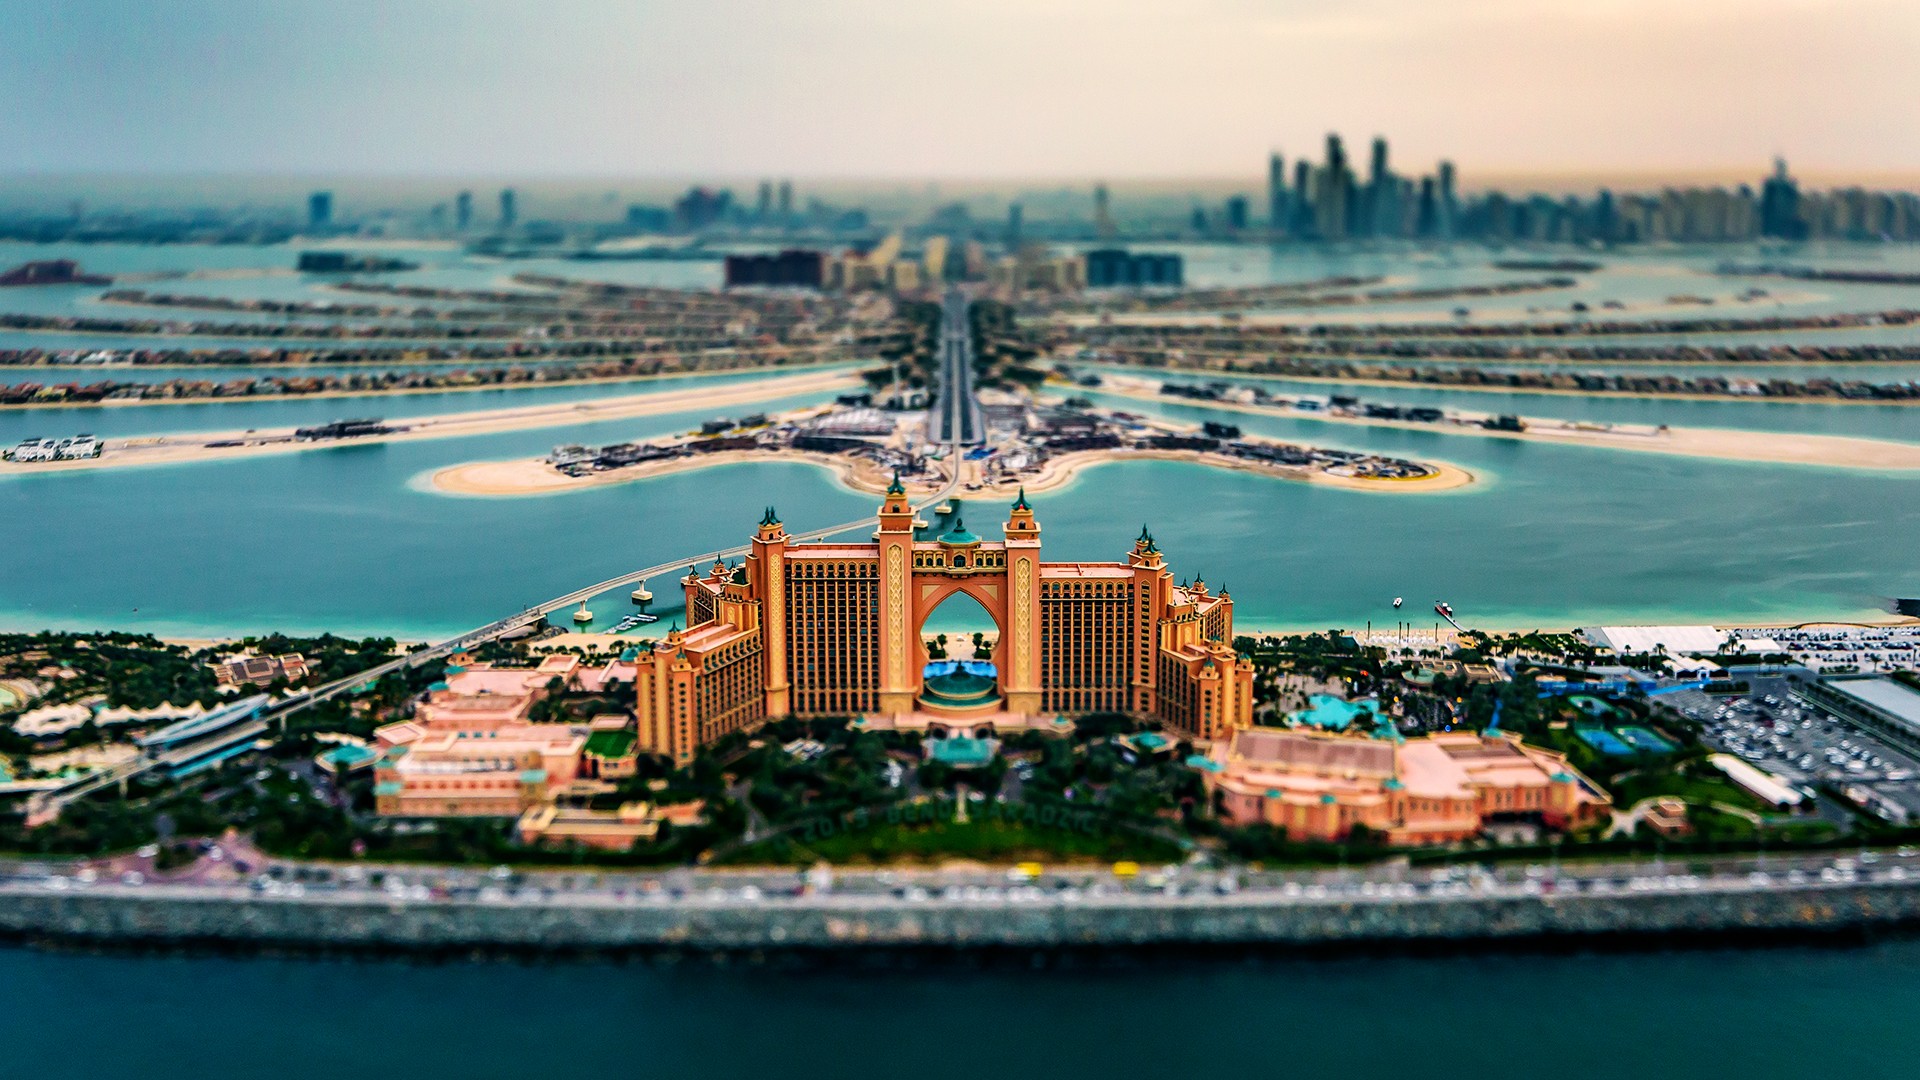 General 1920x1080 tilt shift cityscape Dubai United Arab Emirates architecture island sea hotel